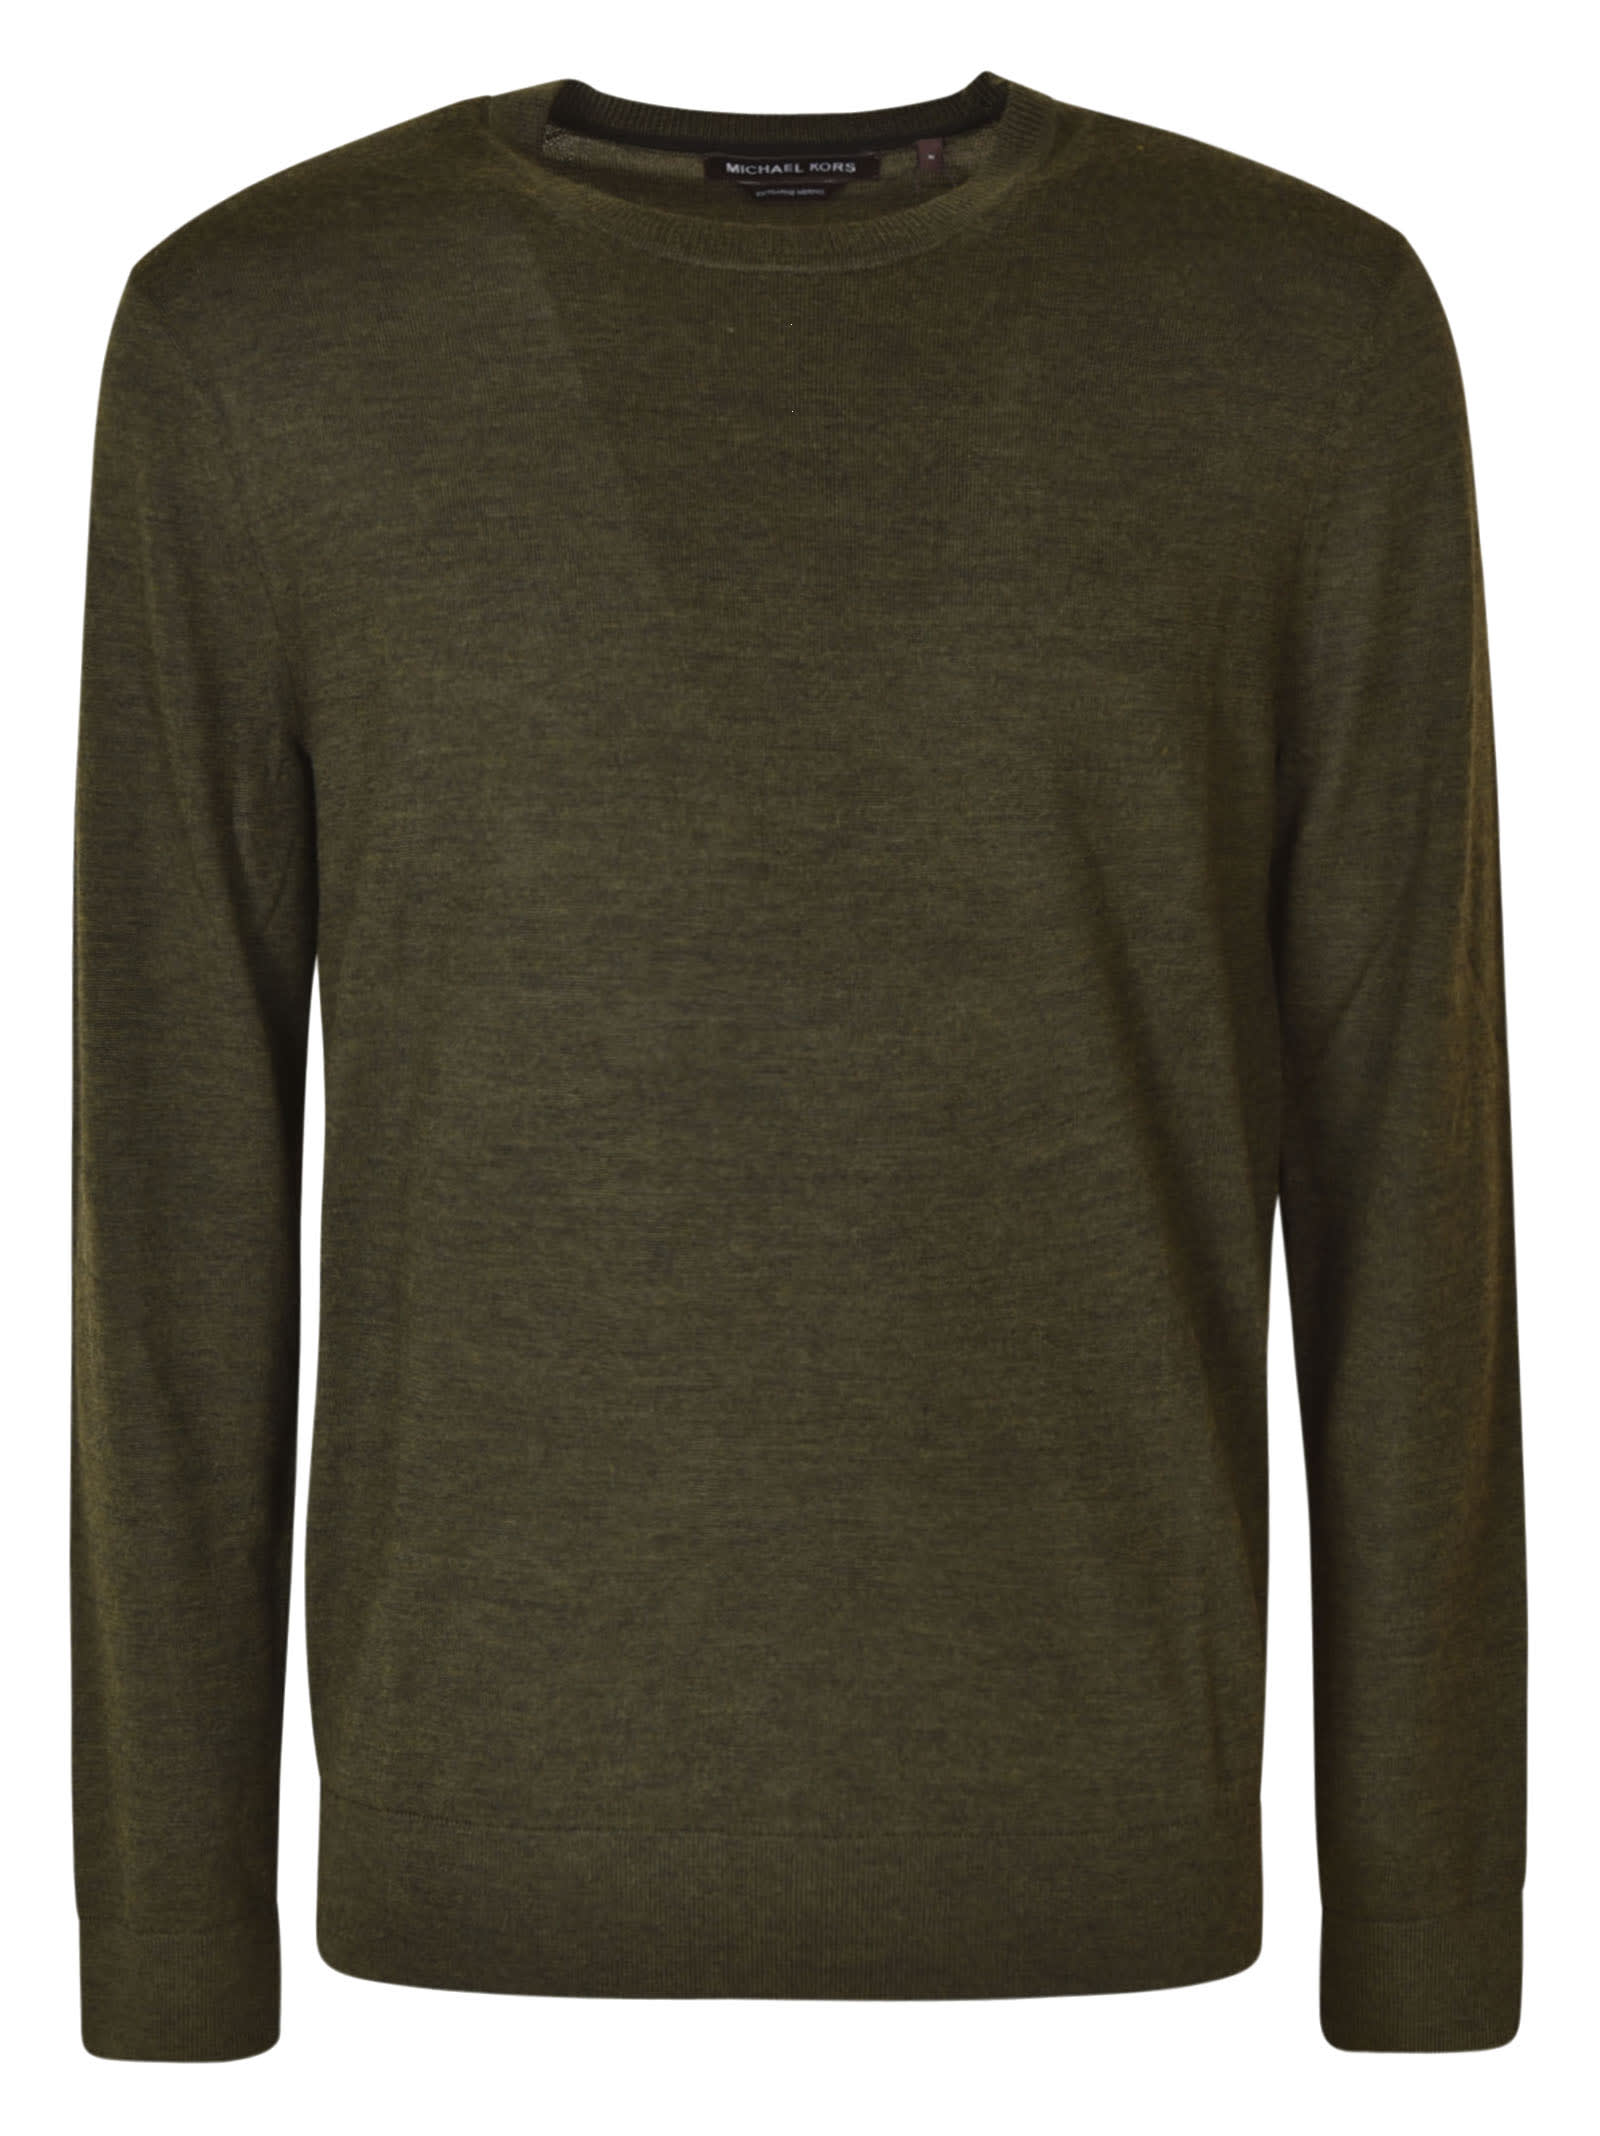 Michael Kors Plain Ribbed Sweater